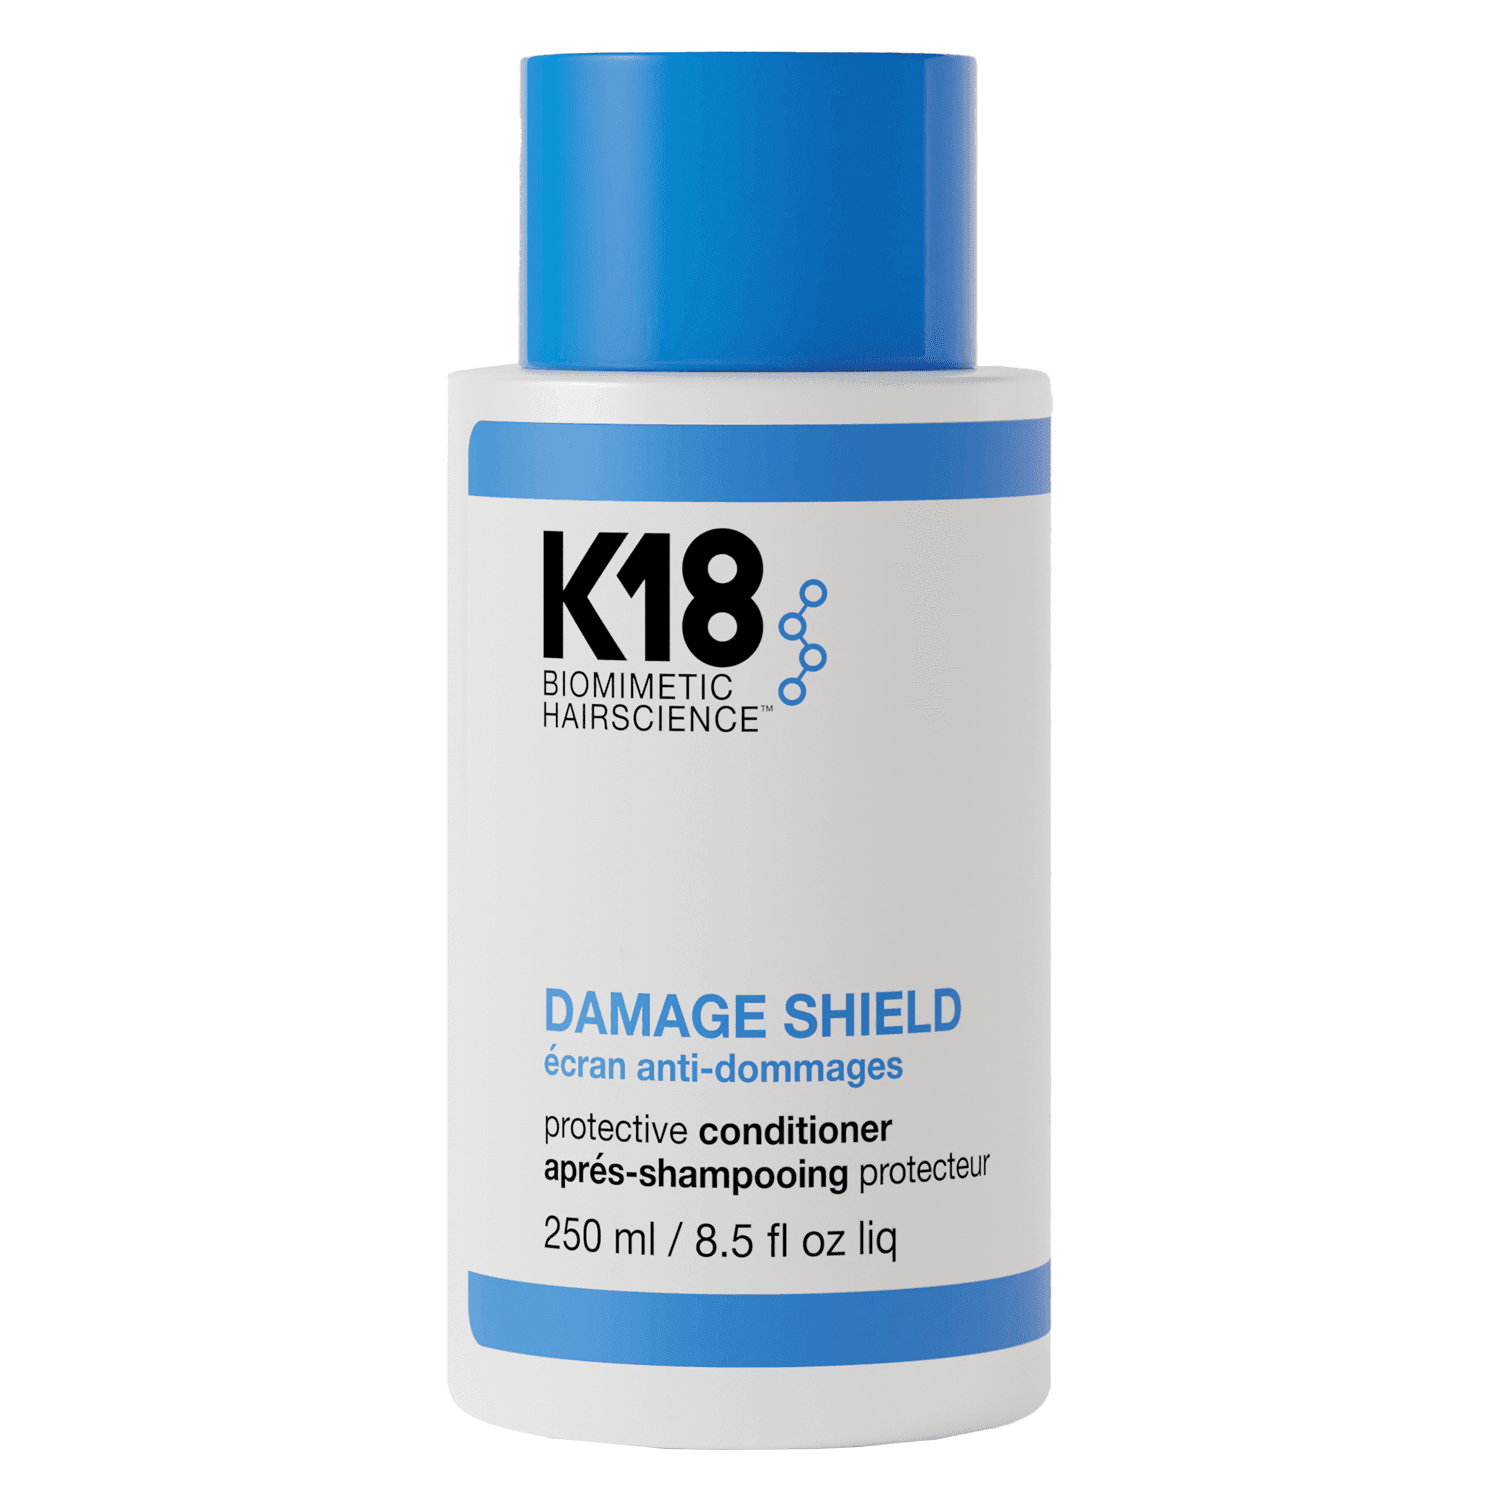 K18 Biomimetic Hairscience - Damage Shield Conditioner